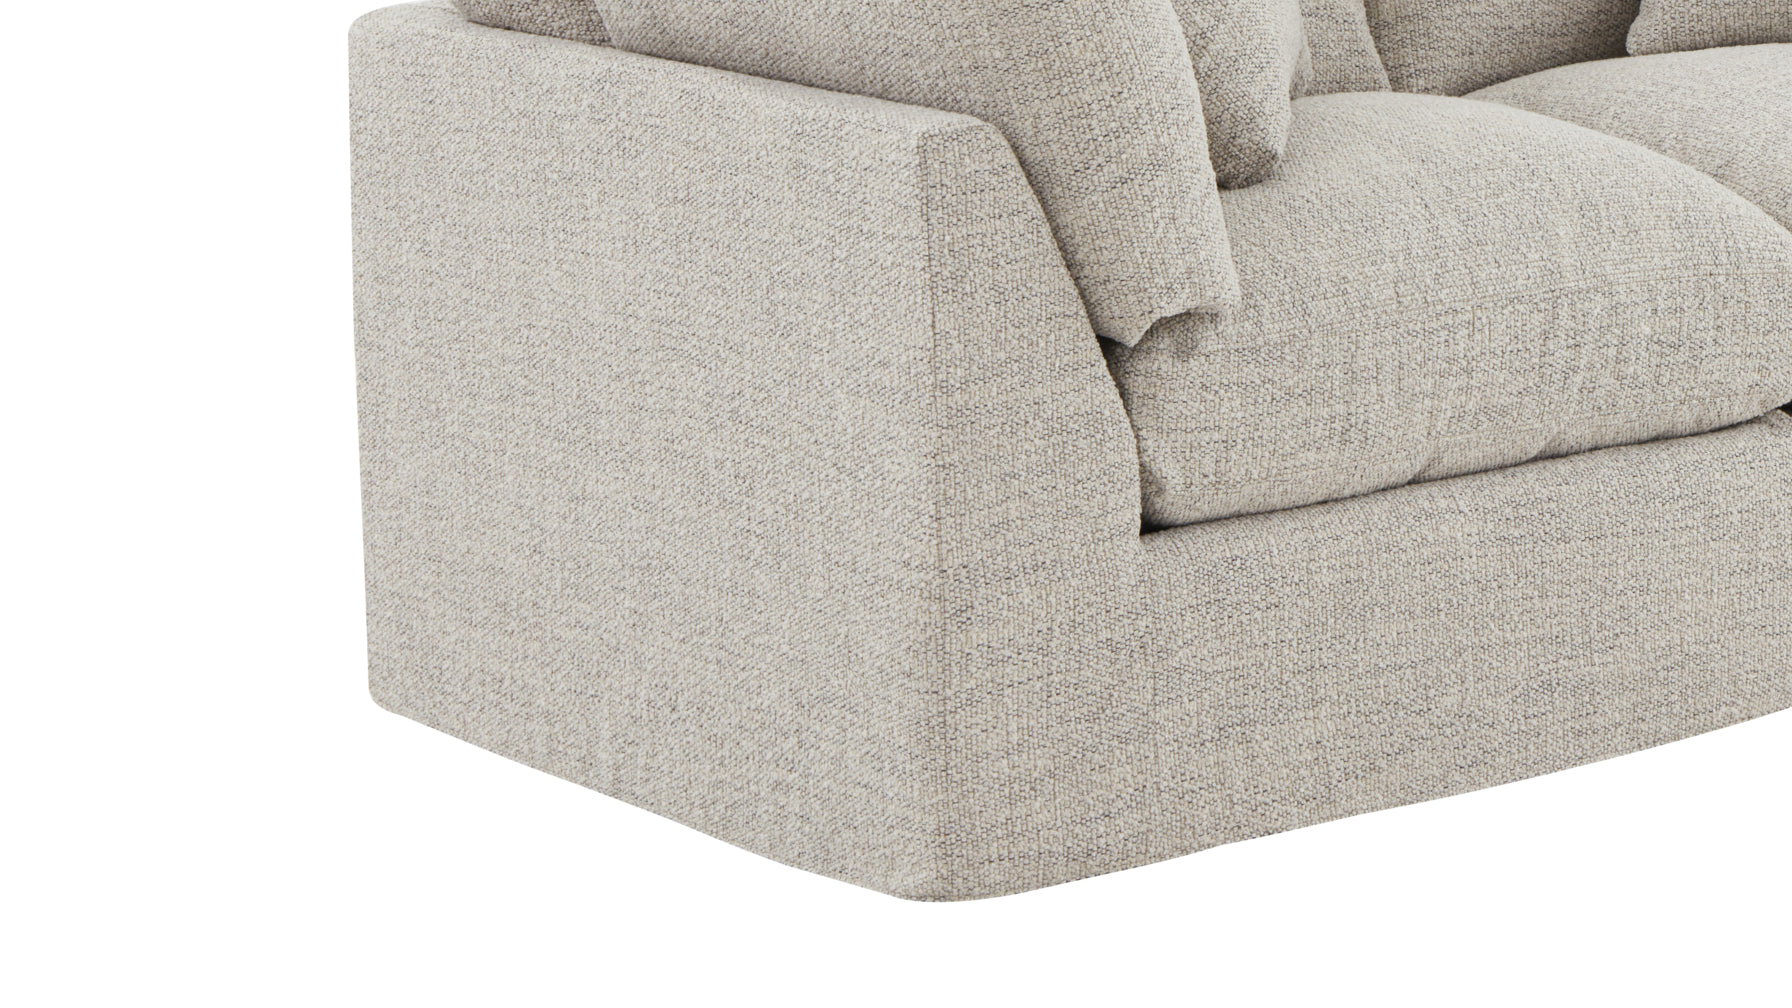 Get Together™ 3-Piece Modular Sofa, Standard, Oatmeal - Image 7